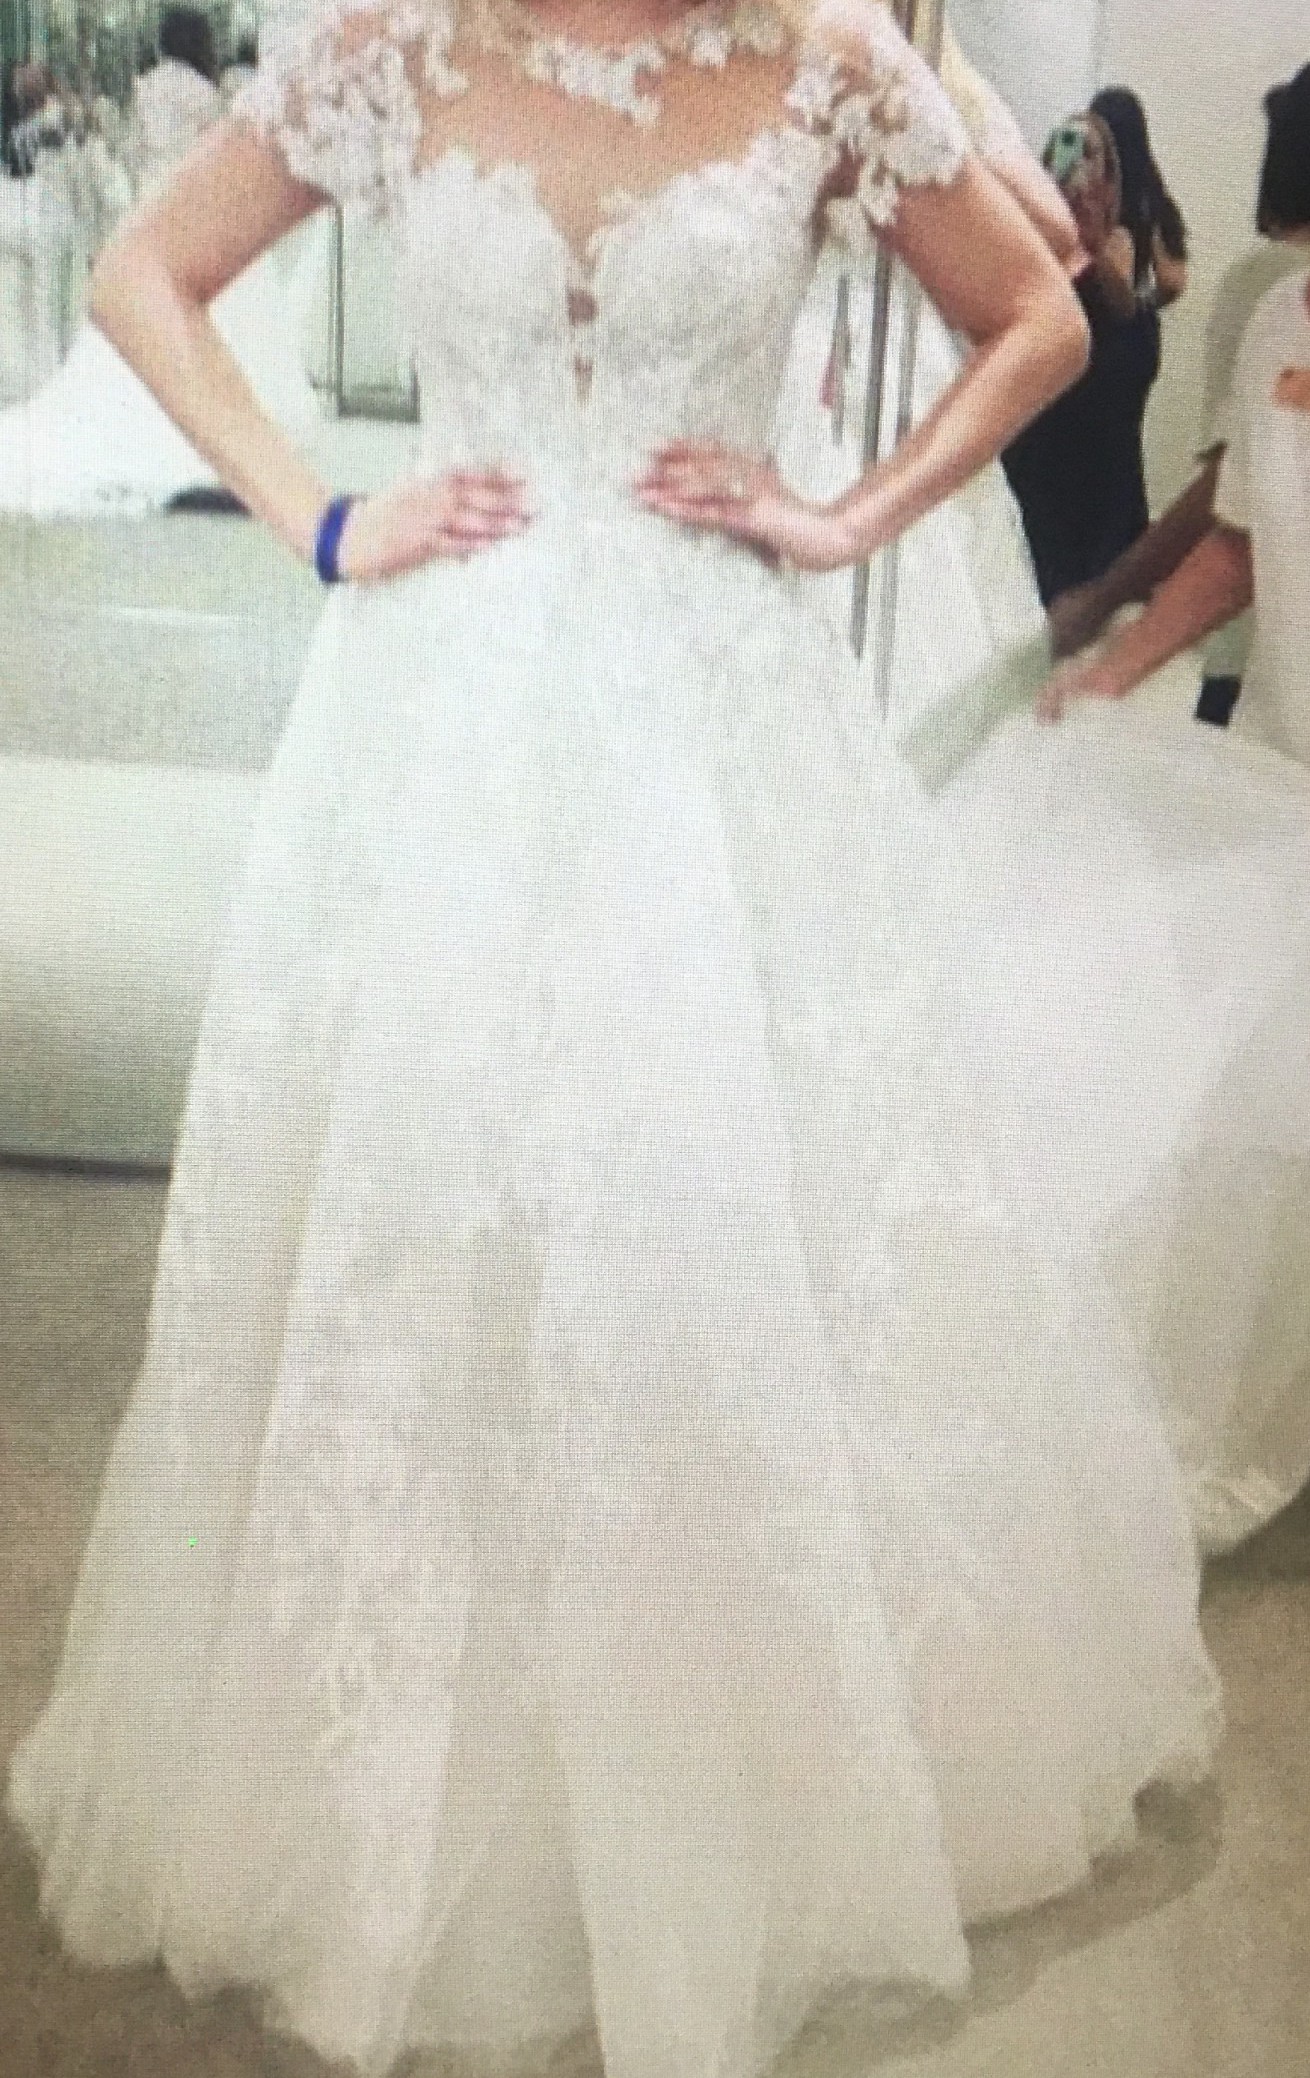 oleg cassini cap sleeve illusion wedding dress